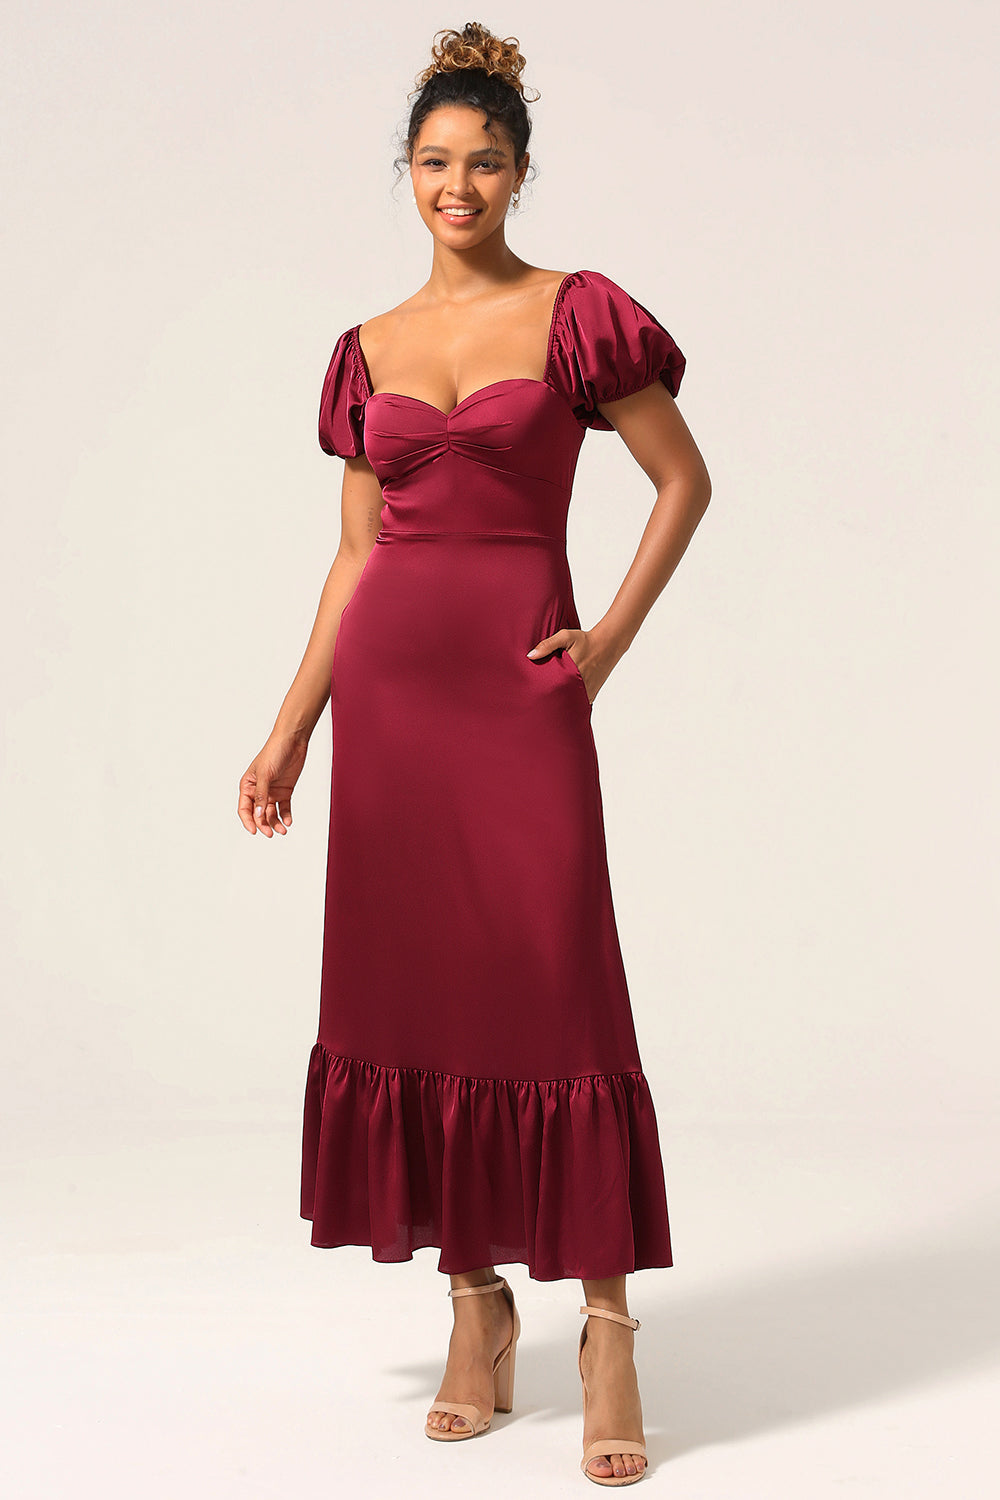 Burgundy Sheath Square Neck Tea-Length Satin Bridesmaid Dress with Ruffles